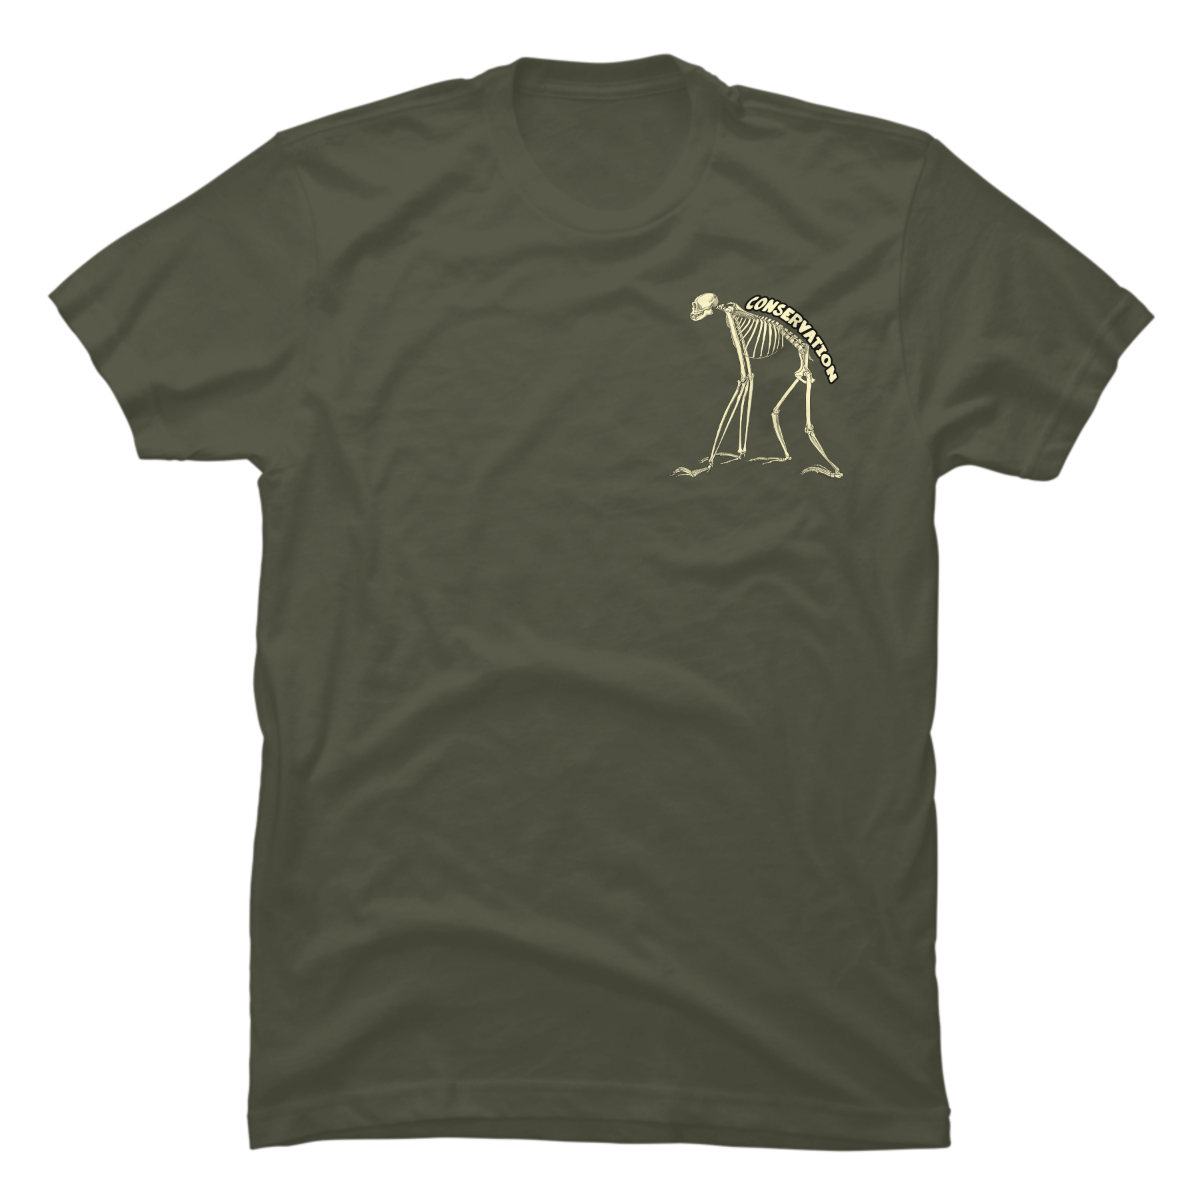 conservation shirts